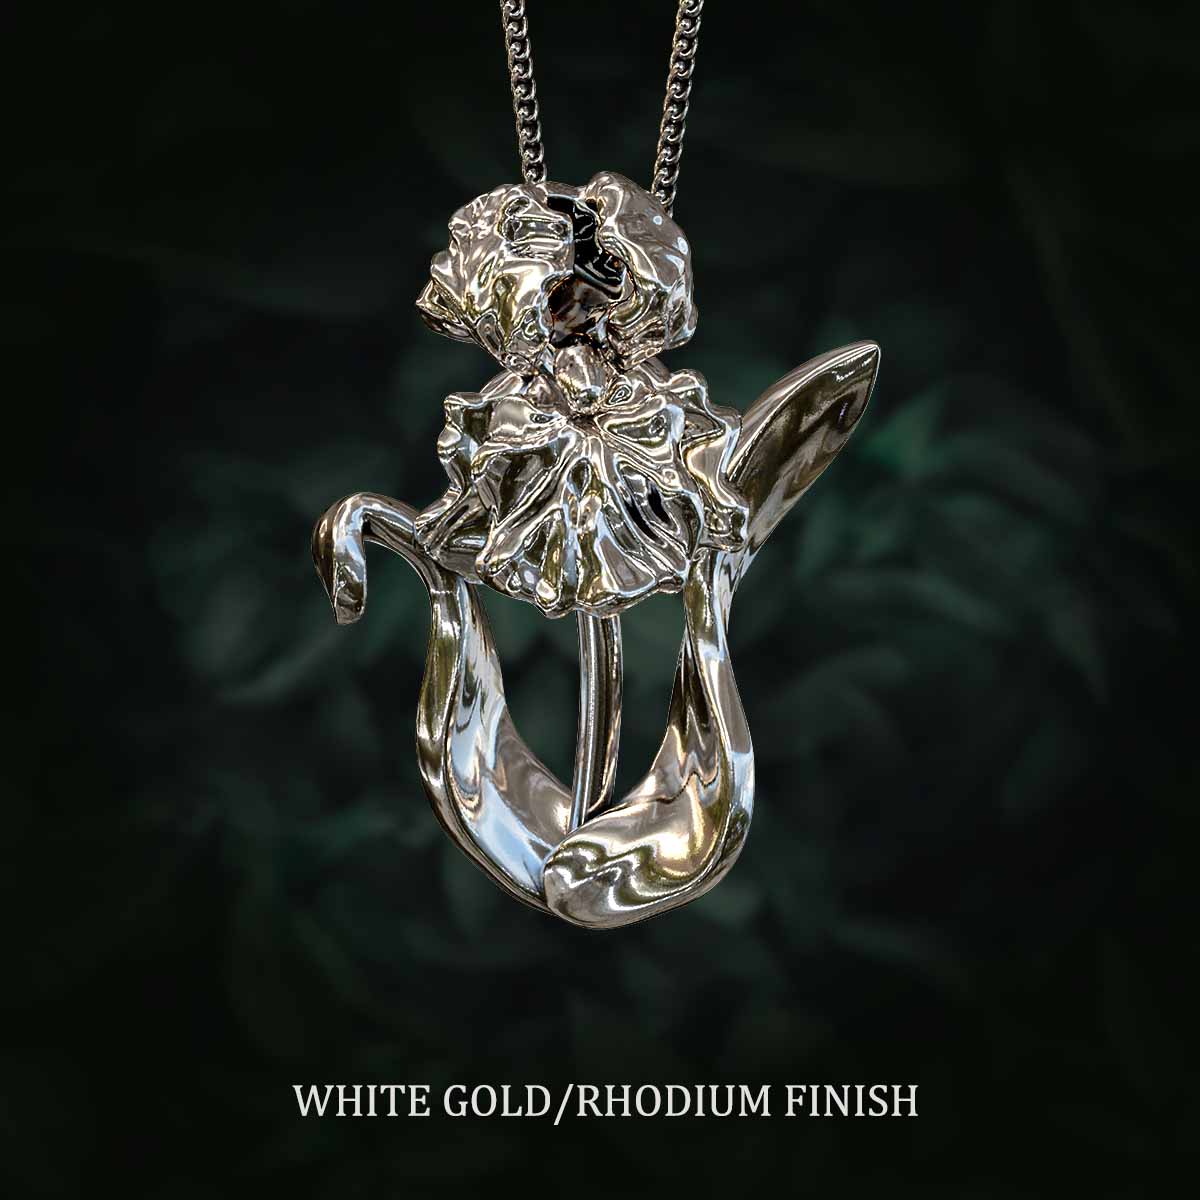     White-Gold-Rhodium-Finish-Iris-Flower-Pendant-Jewelry-For-Necklace